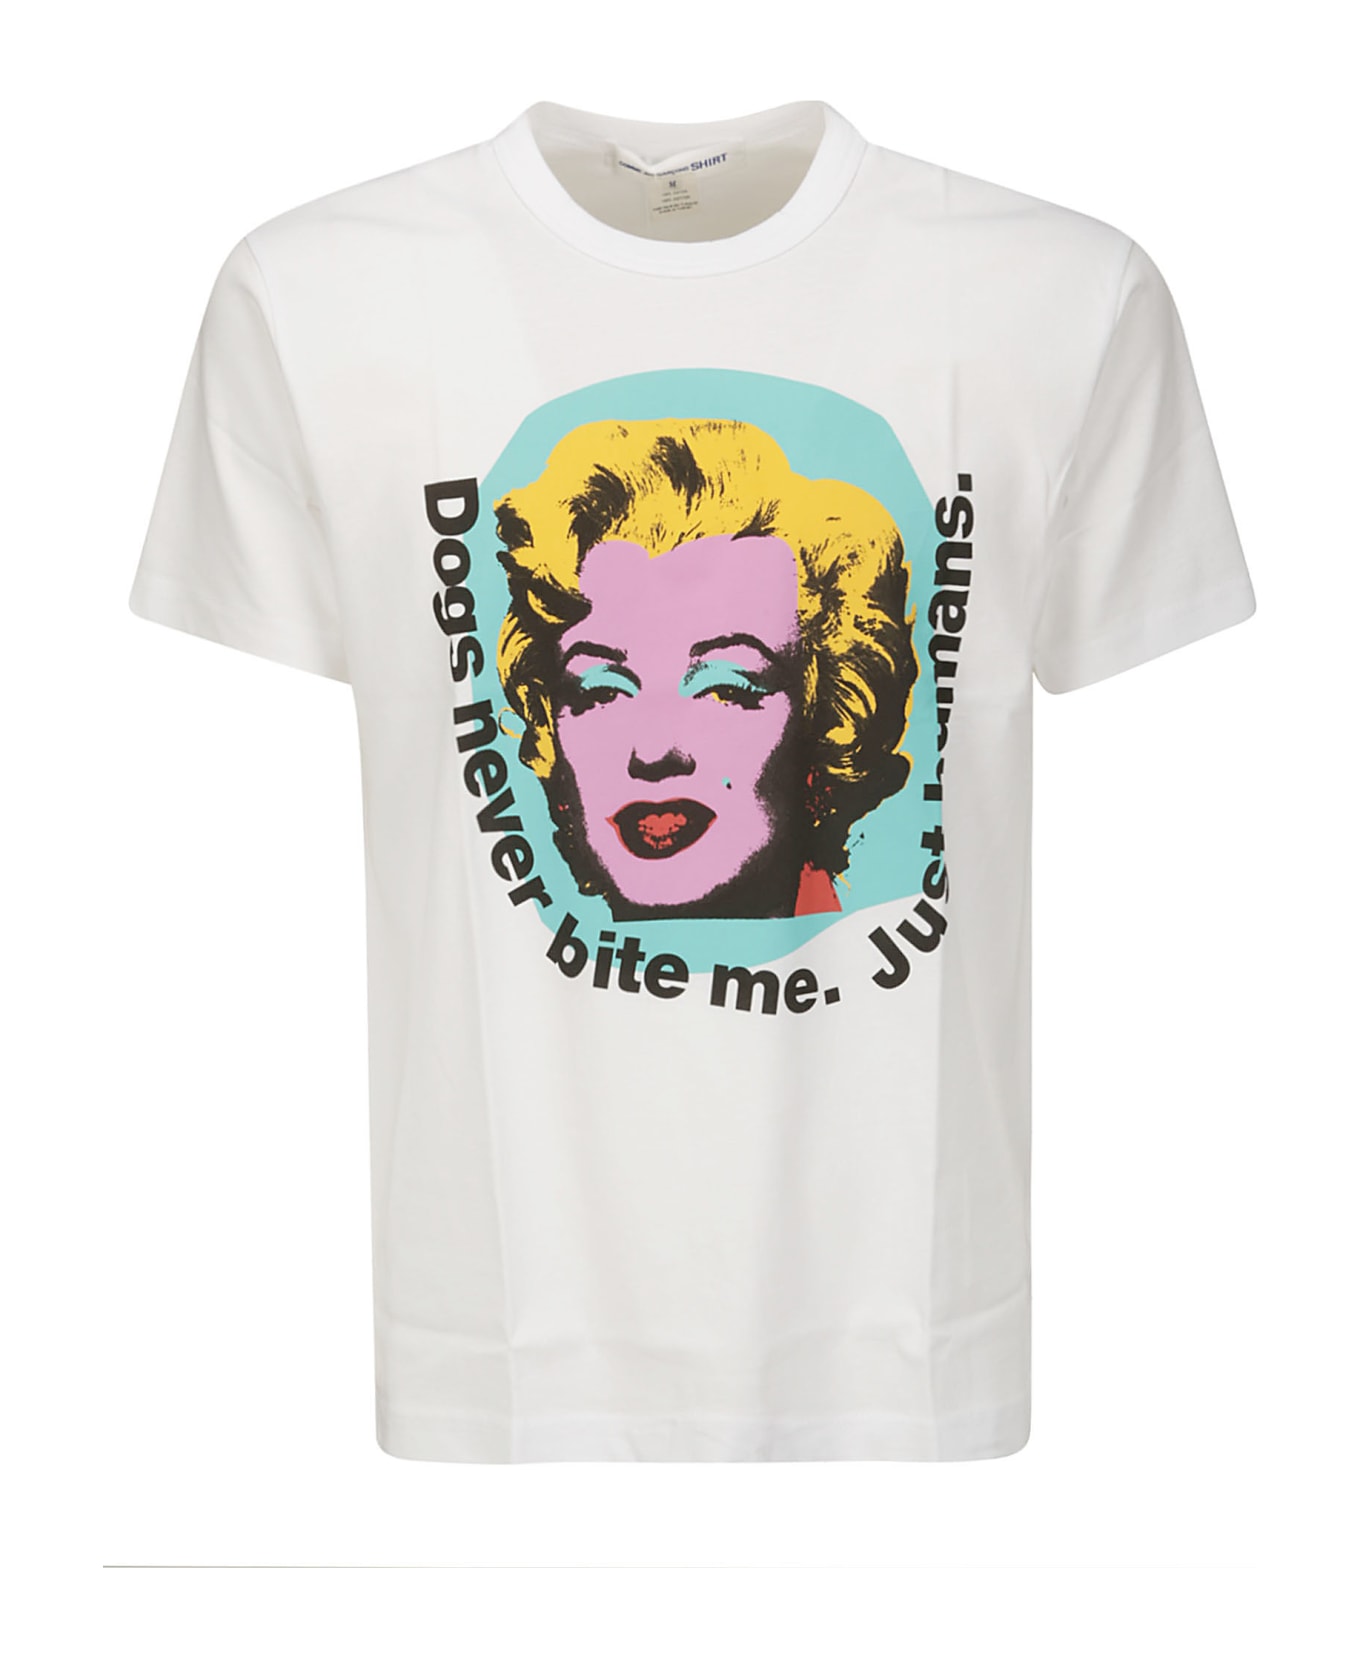 Comme des Garçons Shirt Cotton Jersey Plain With Print I Andy Warhol - WHITE シャツ